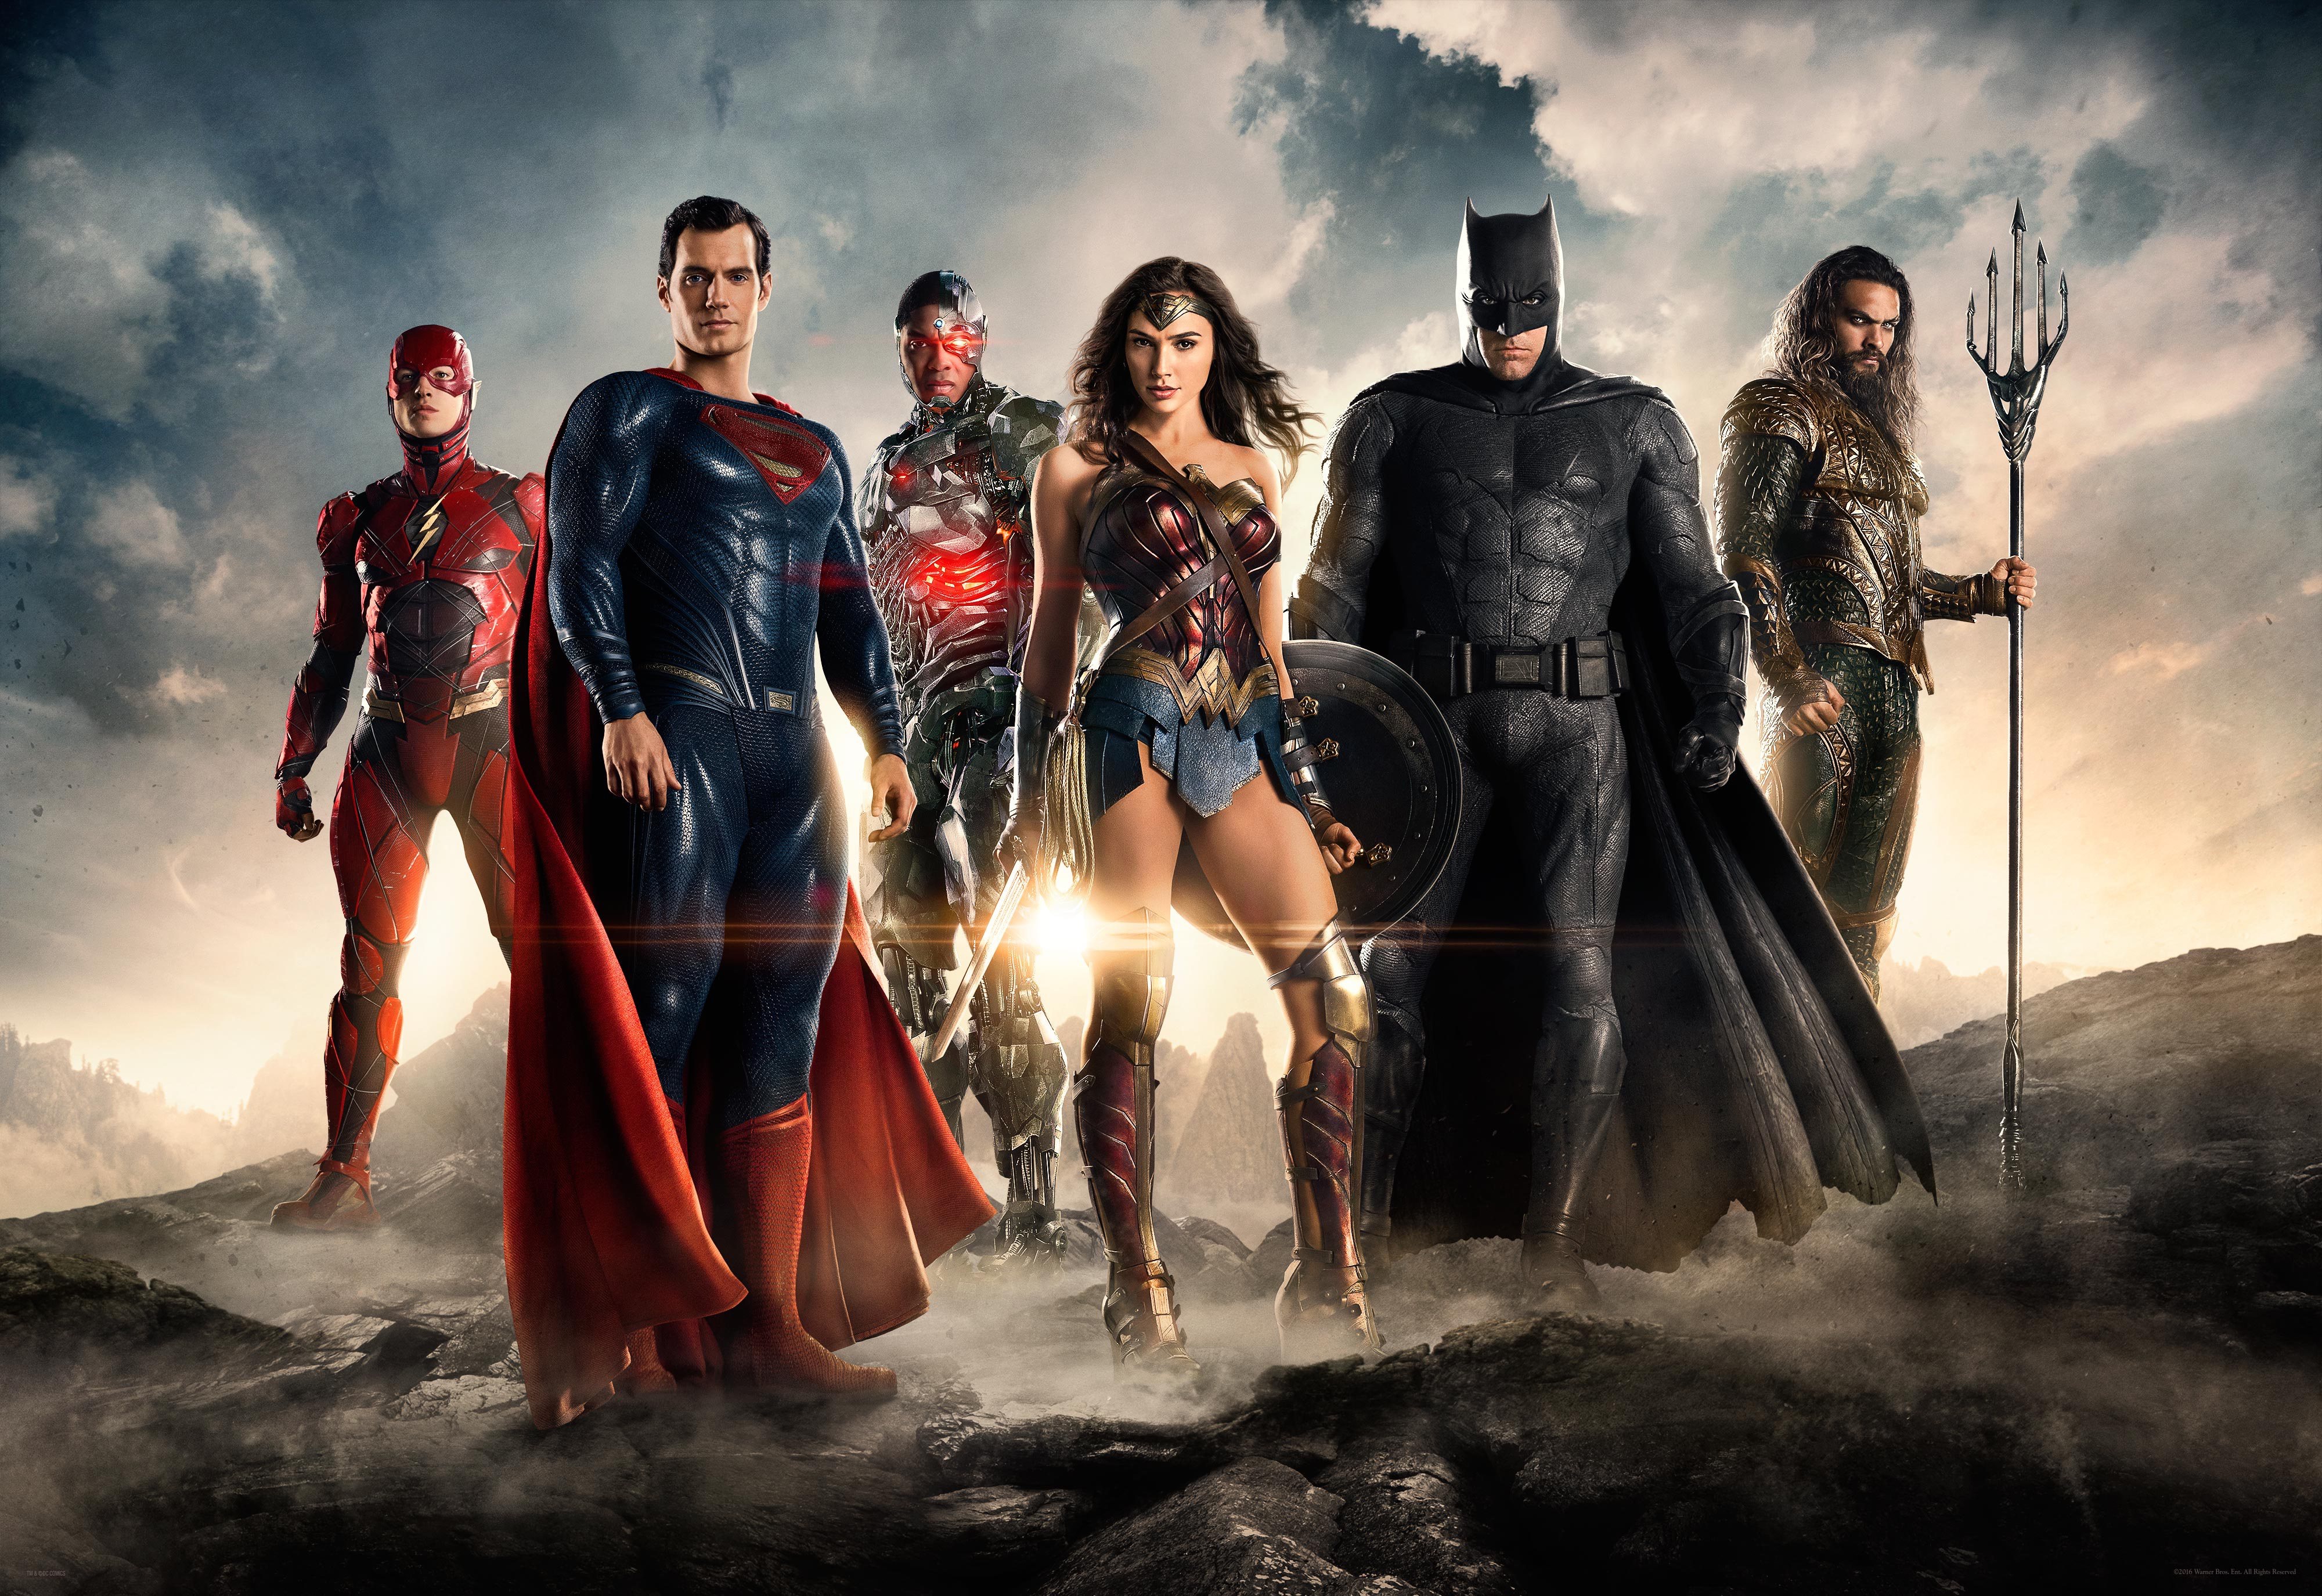 superman, batman, wonder woman, jason momoa, aquaman, gal gadot, movie, ben affleck, cyborg (dc comics), justice league, barry allen, ezra miller, flash, henry cavill, ray fisher